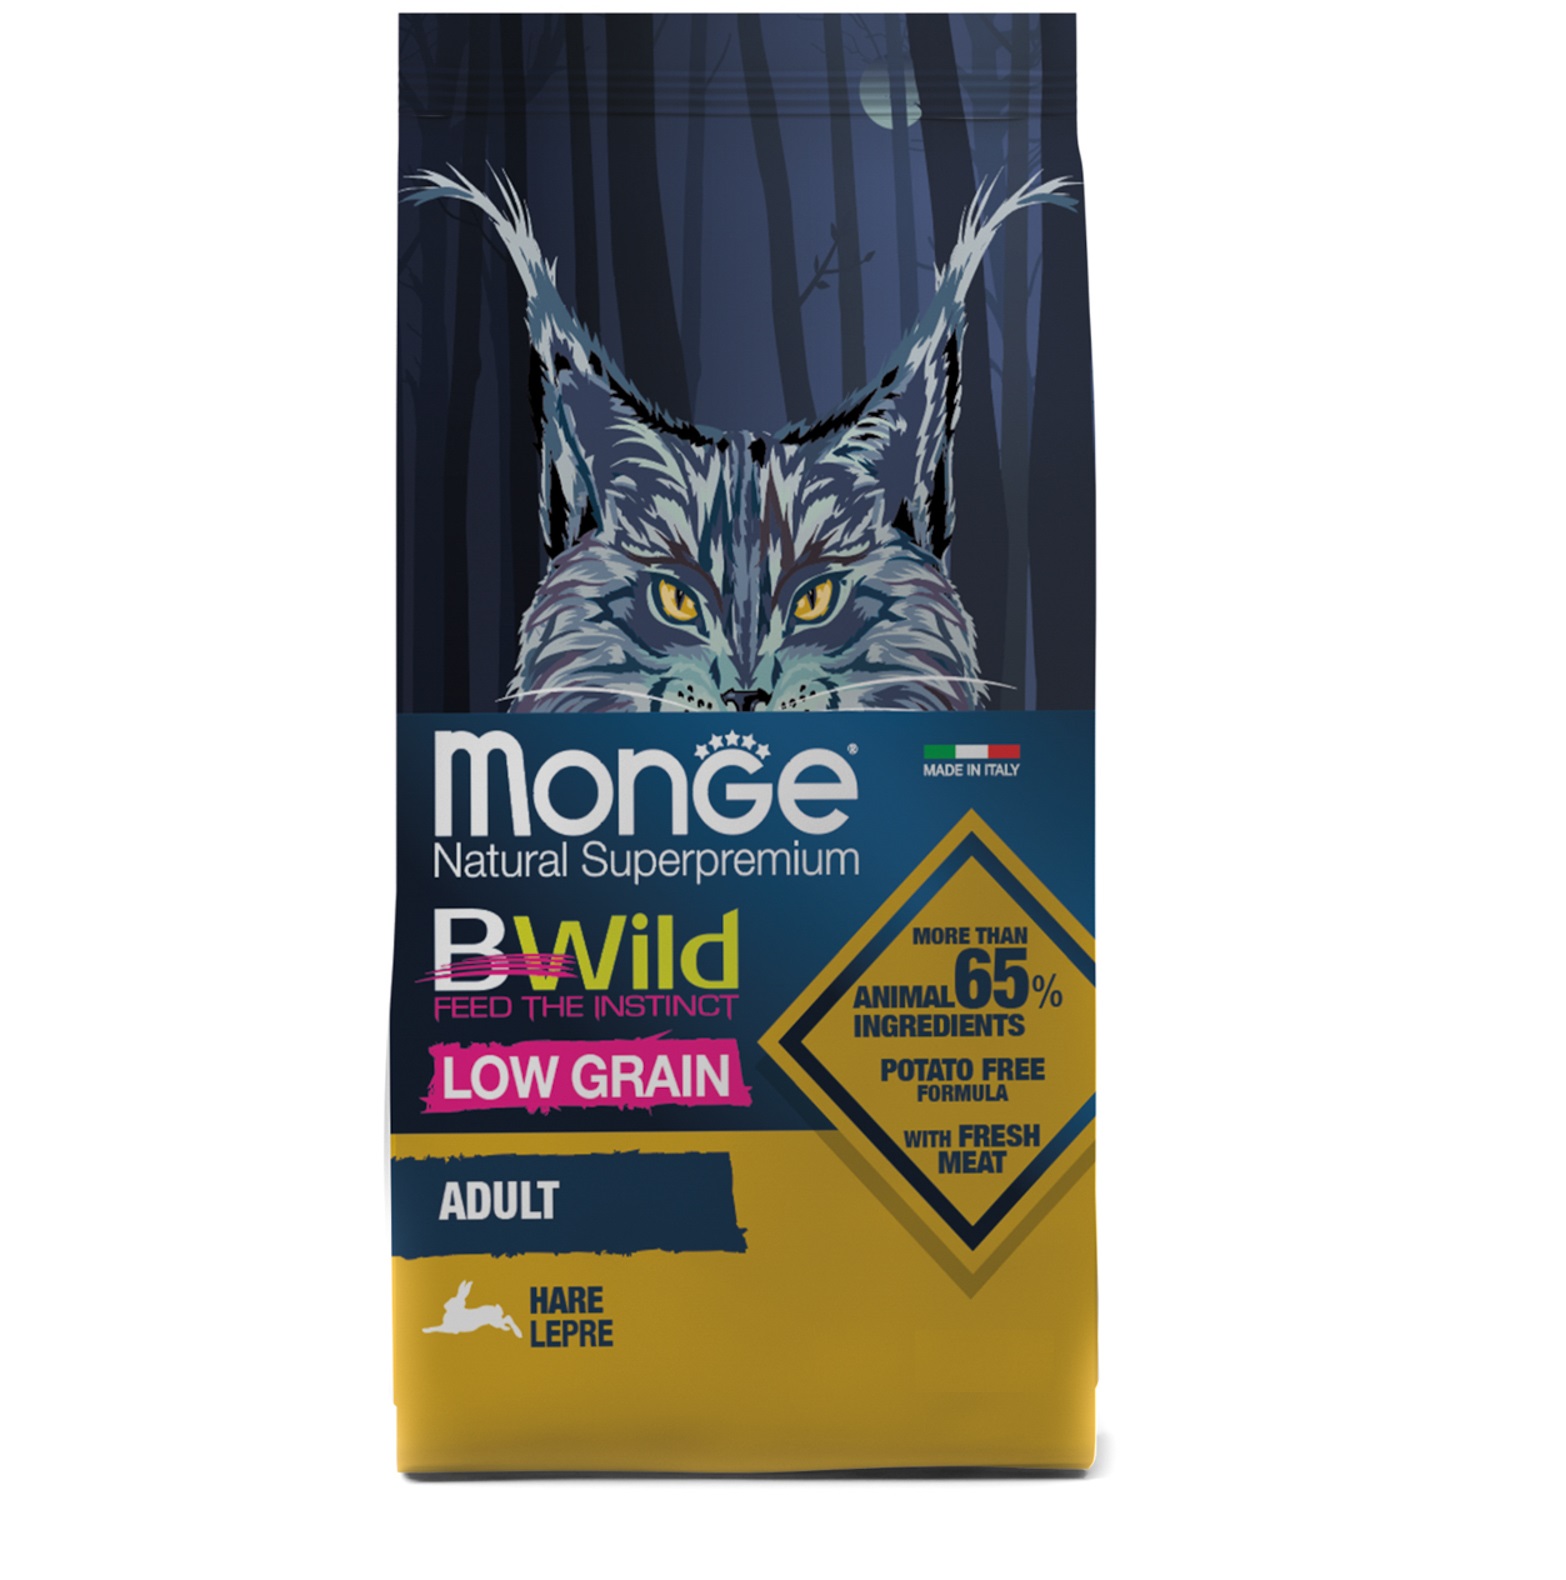 Монж 1,5кг - BWild - Заяц, НИЗКОзерновой корм для кошек (Monge BWild Low Grain)